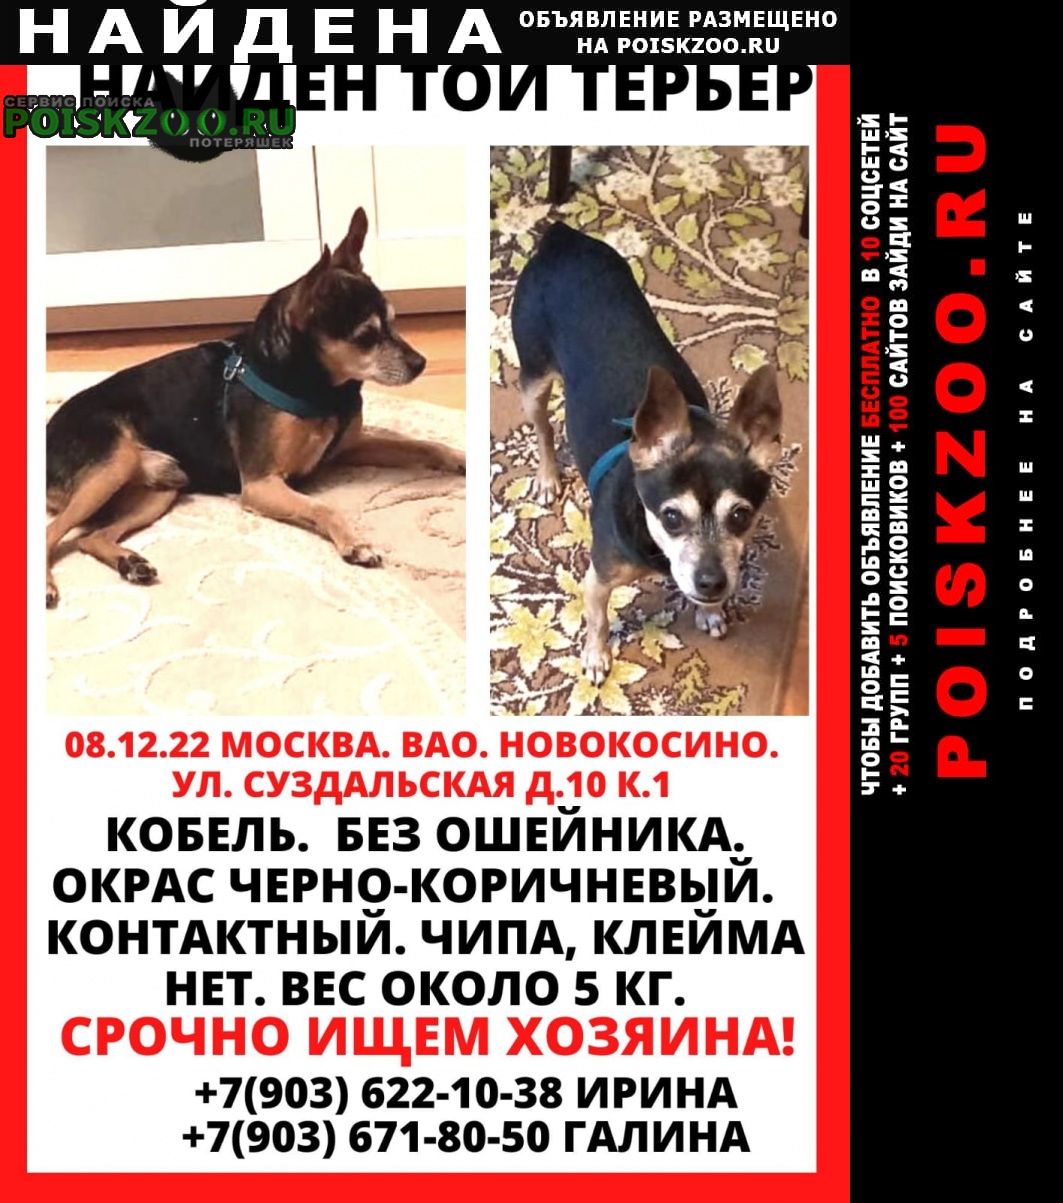 Москва Найдена собака кобель той терьер